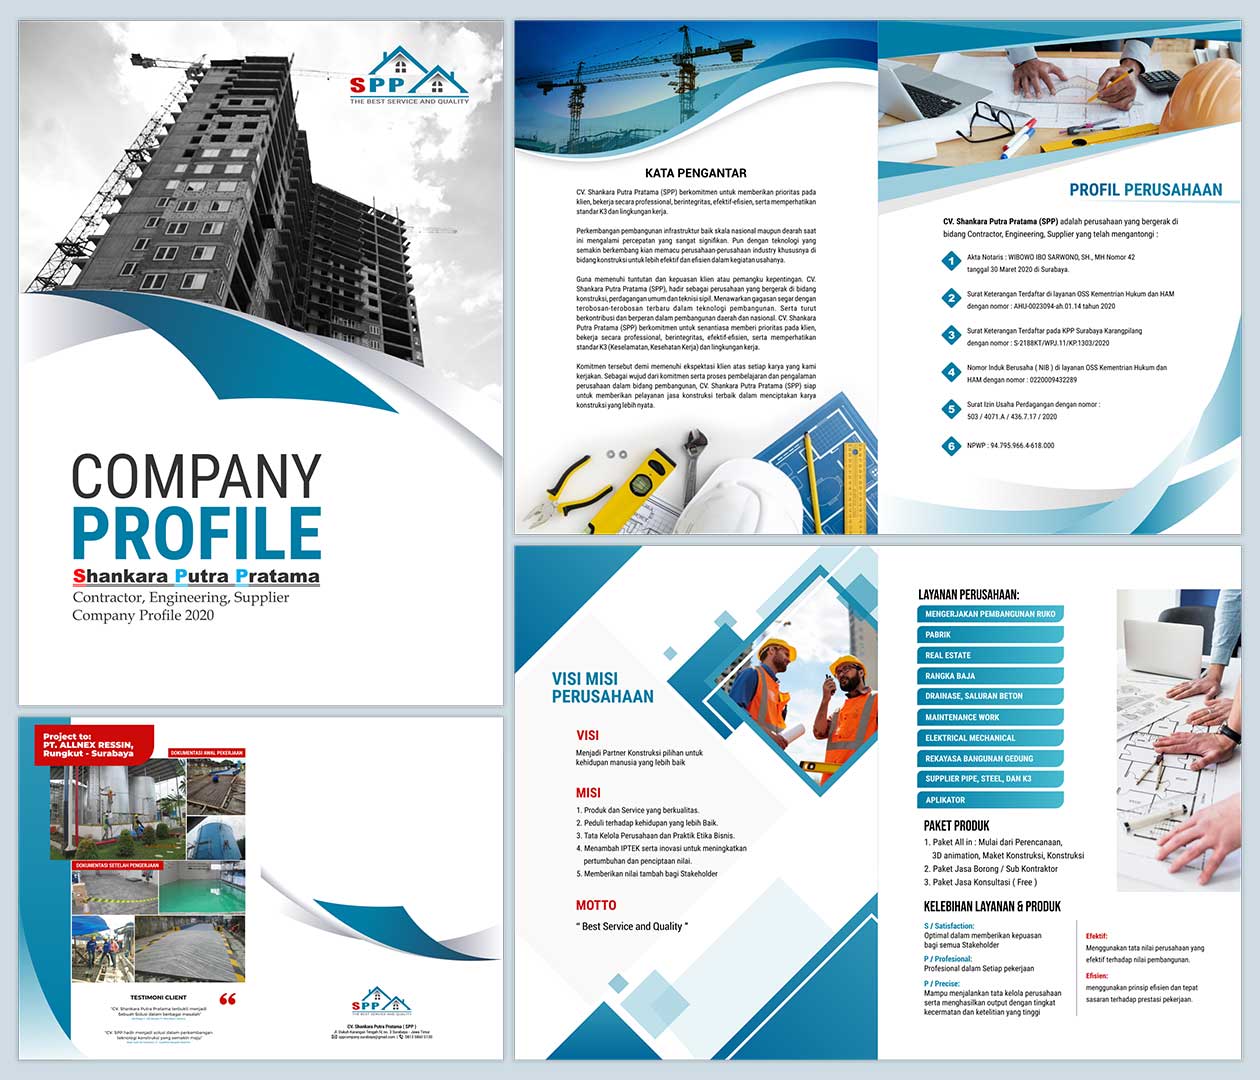 Harga Jasa Desain Company Profile